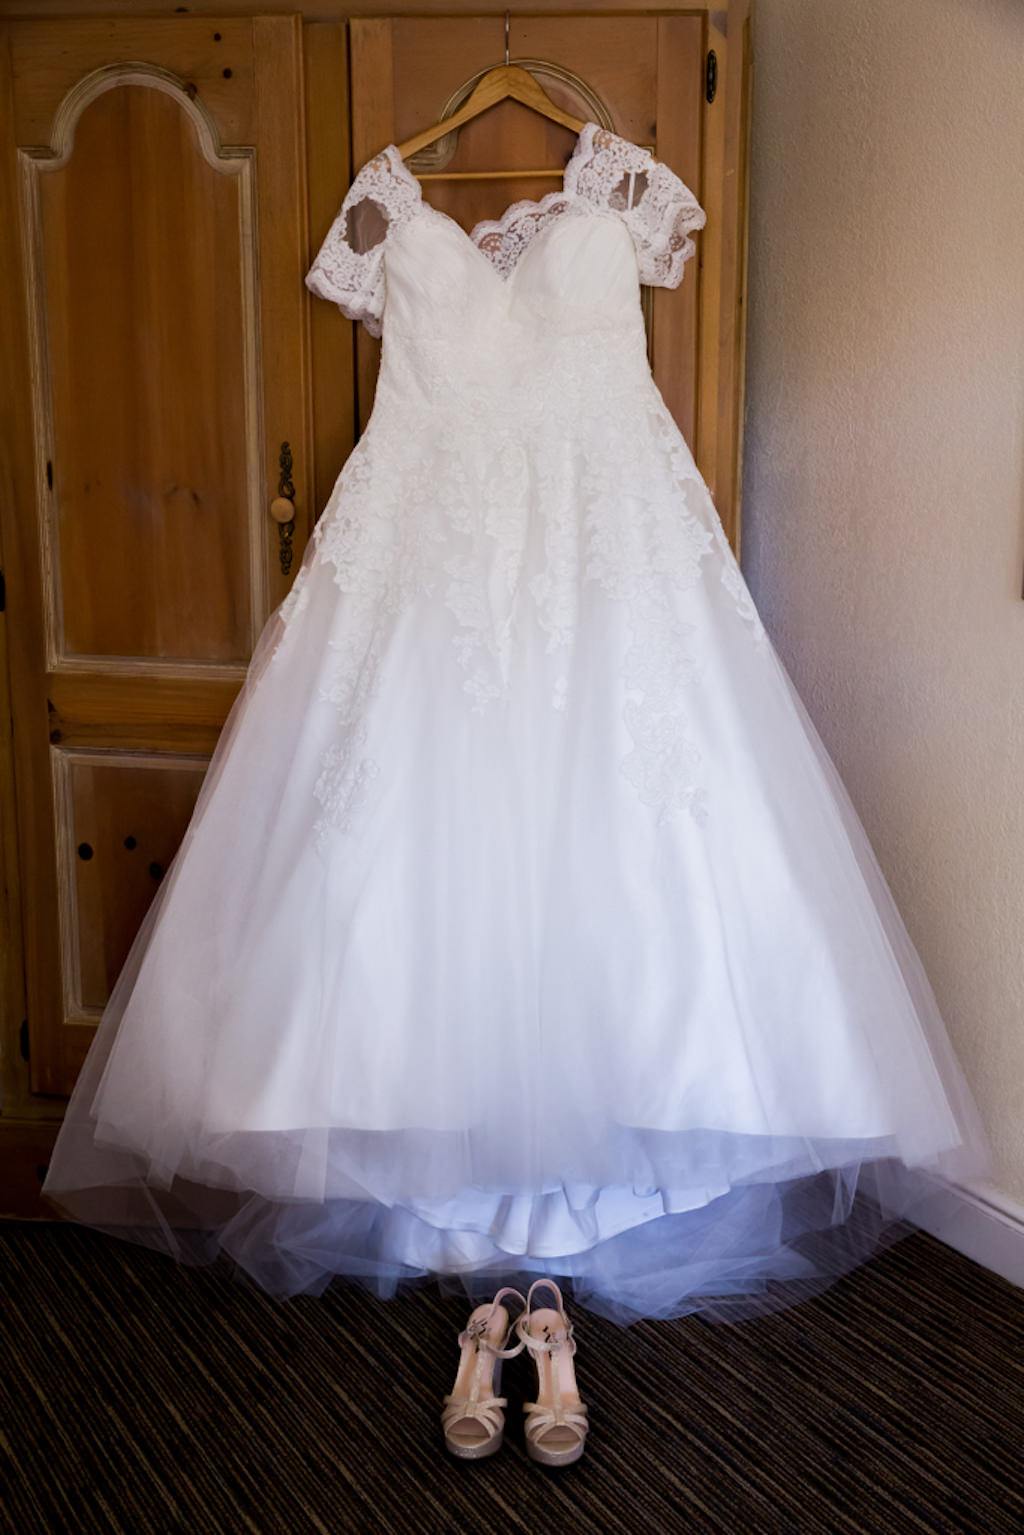 Lace Cap Sleeve Ballgown Pronovias Wedding Dress on Hanger with Rose Gold Peep Toe Platform Wedding Shoes